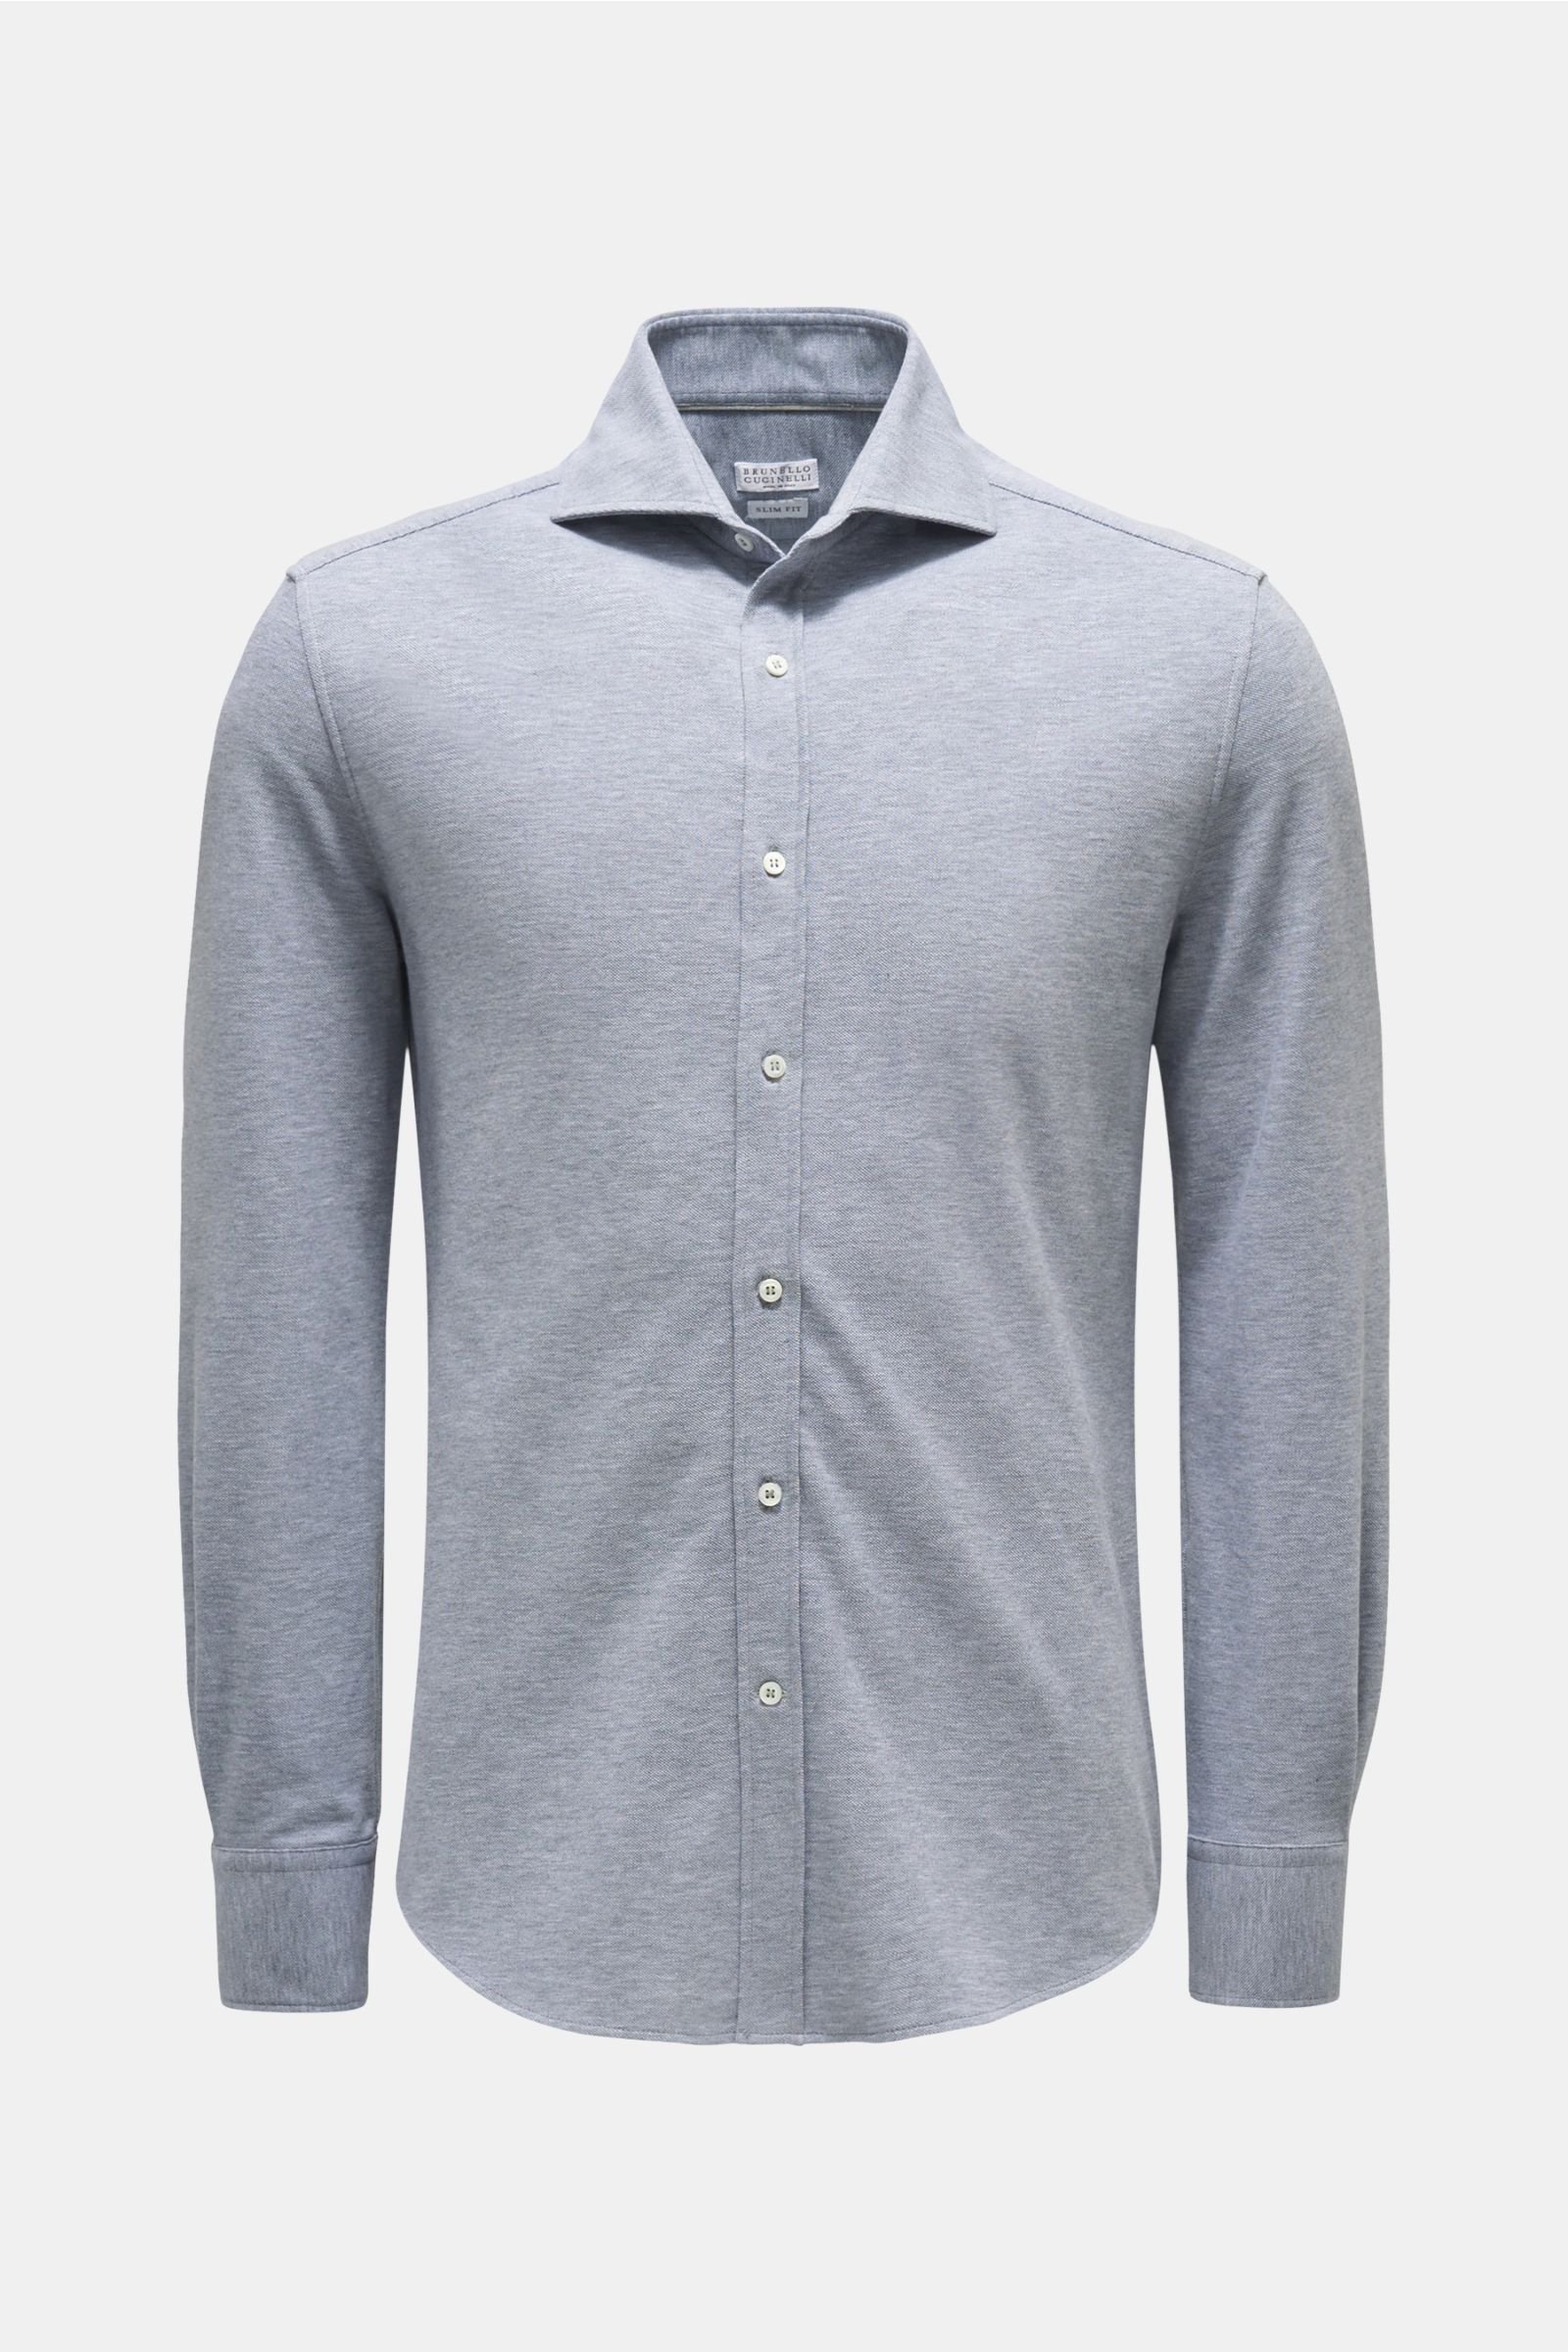 Jersey shirt shark collar grey